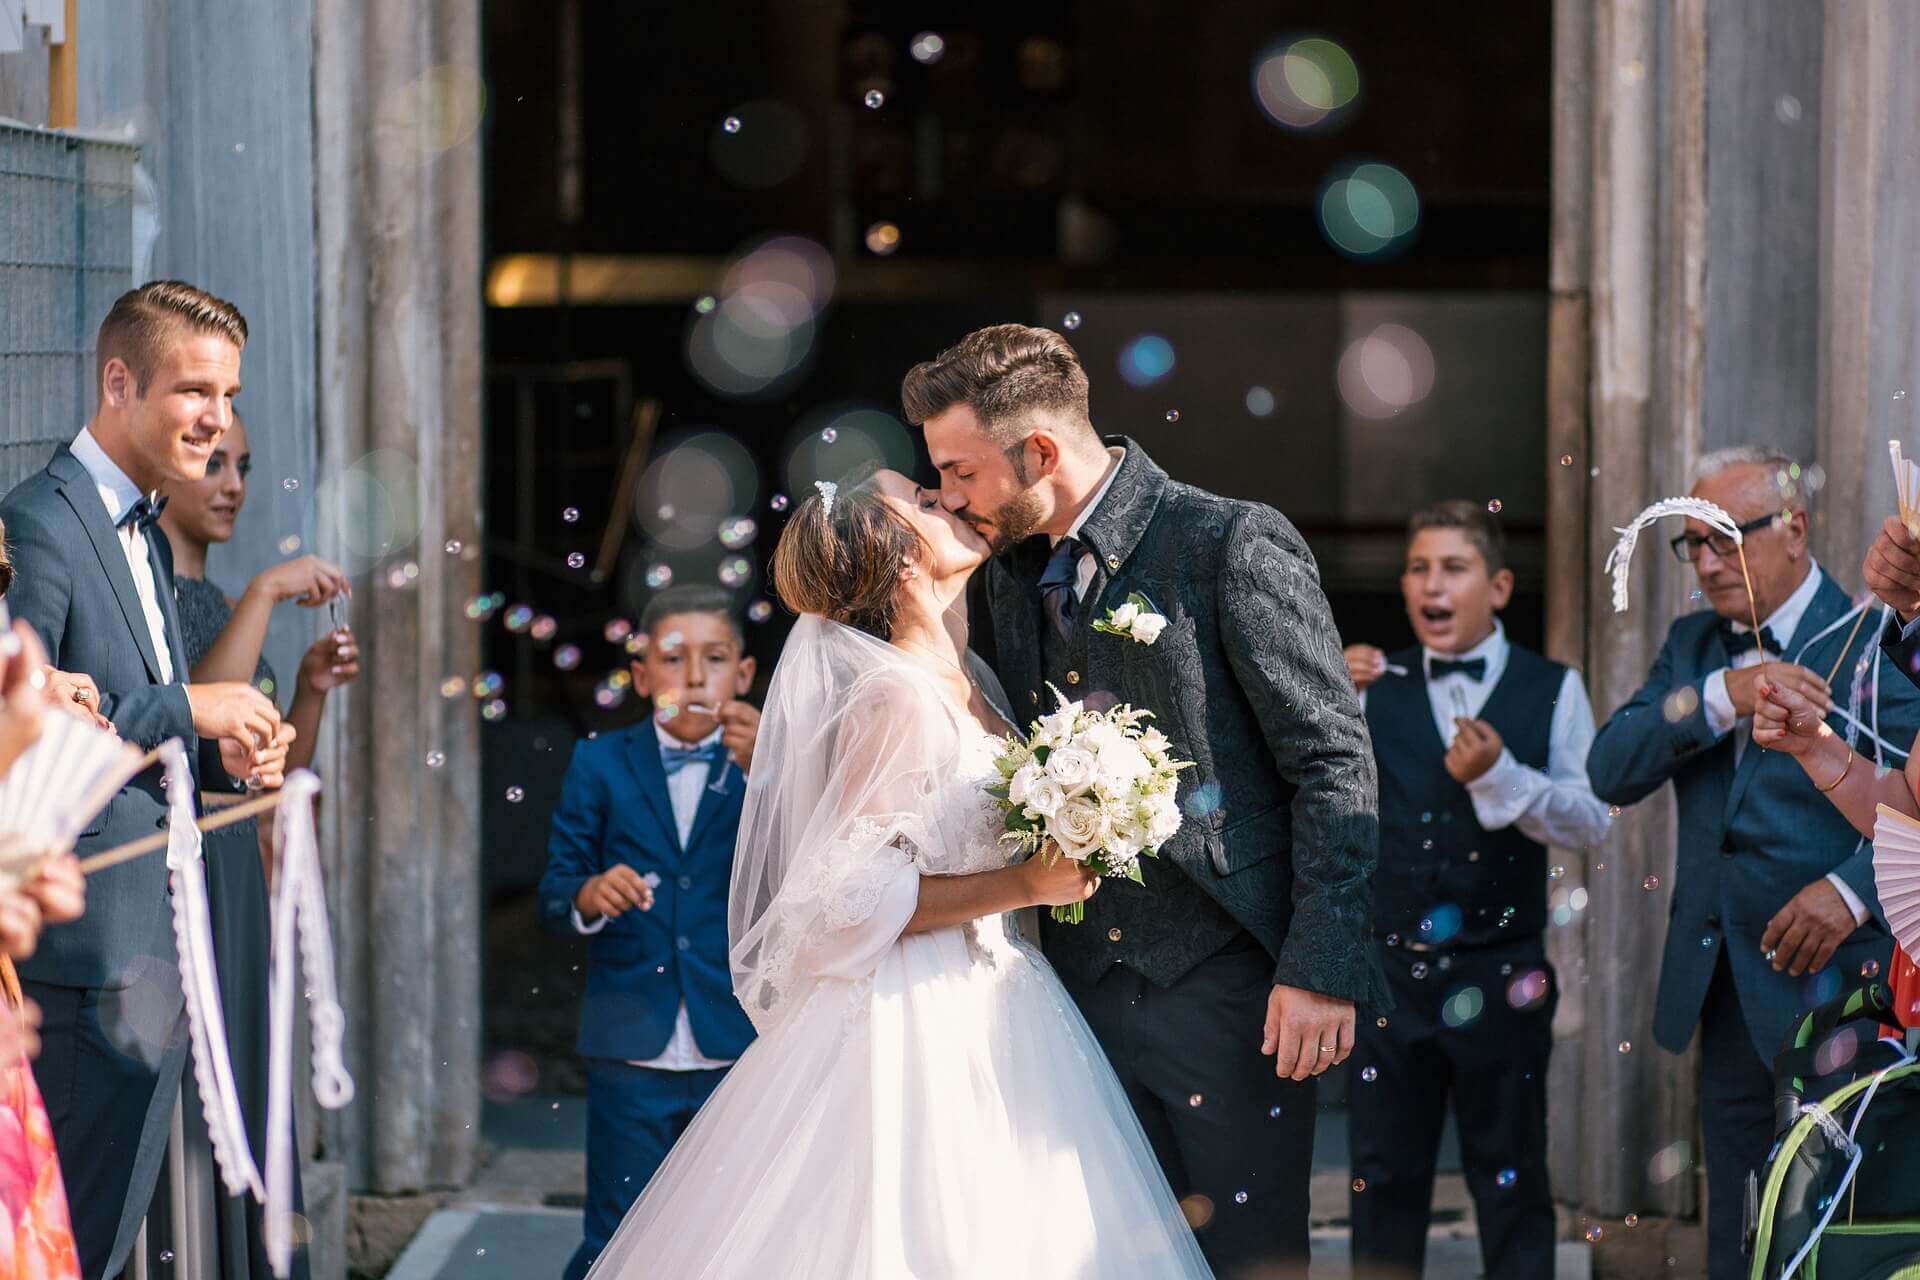 Explore the best reception for wedding venues sydney